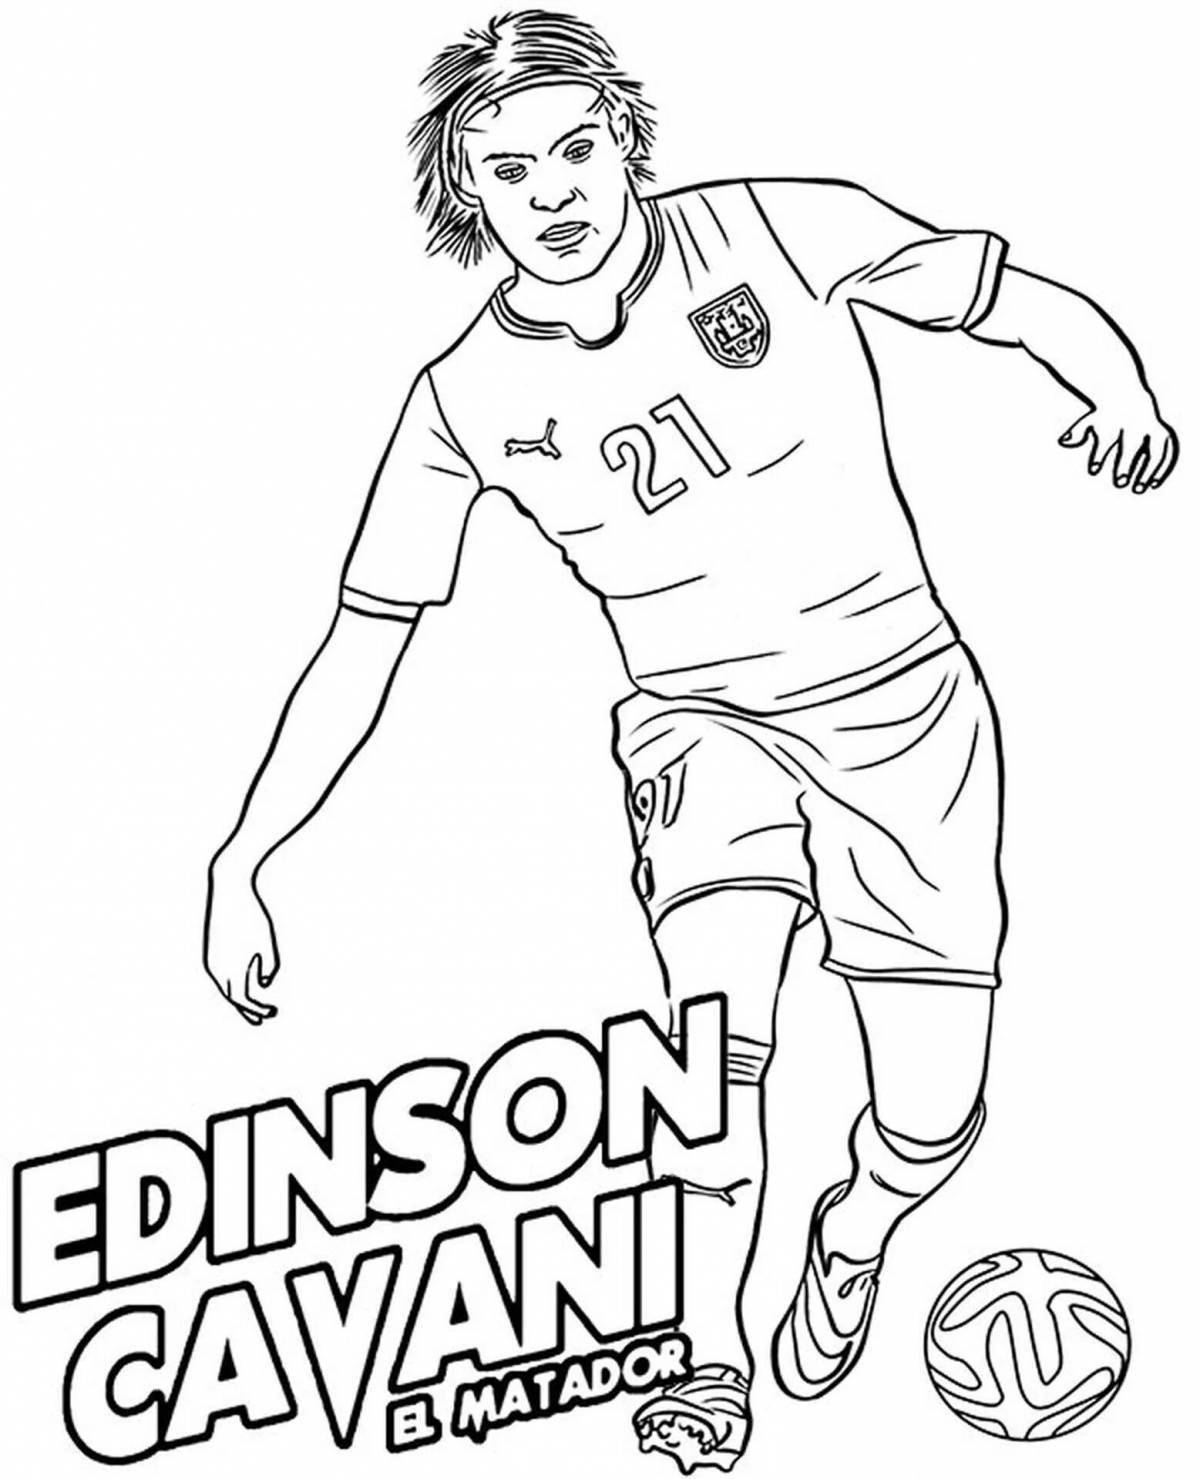 Van Dyck soccer player dynamic coloring